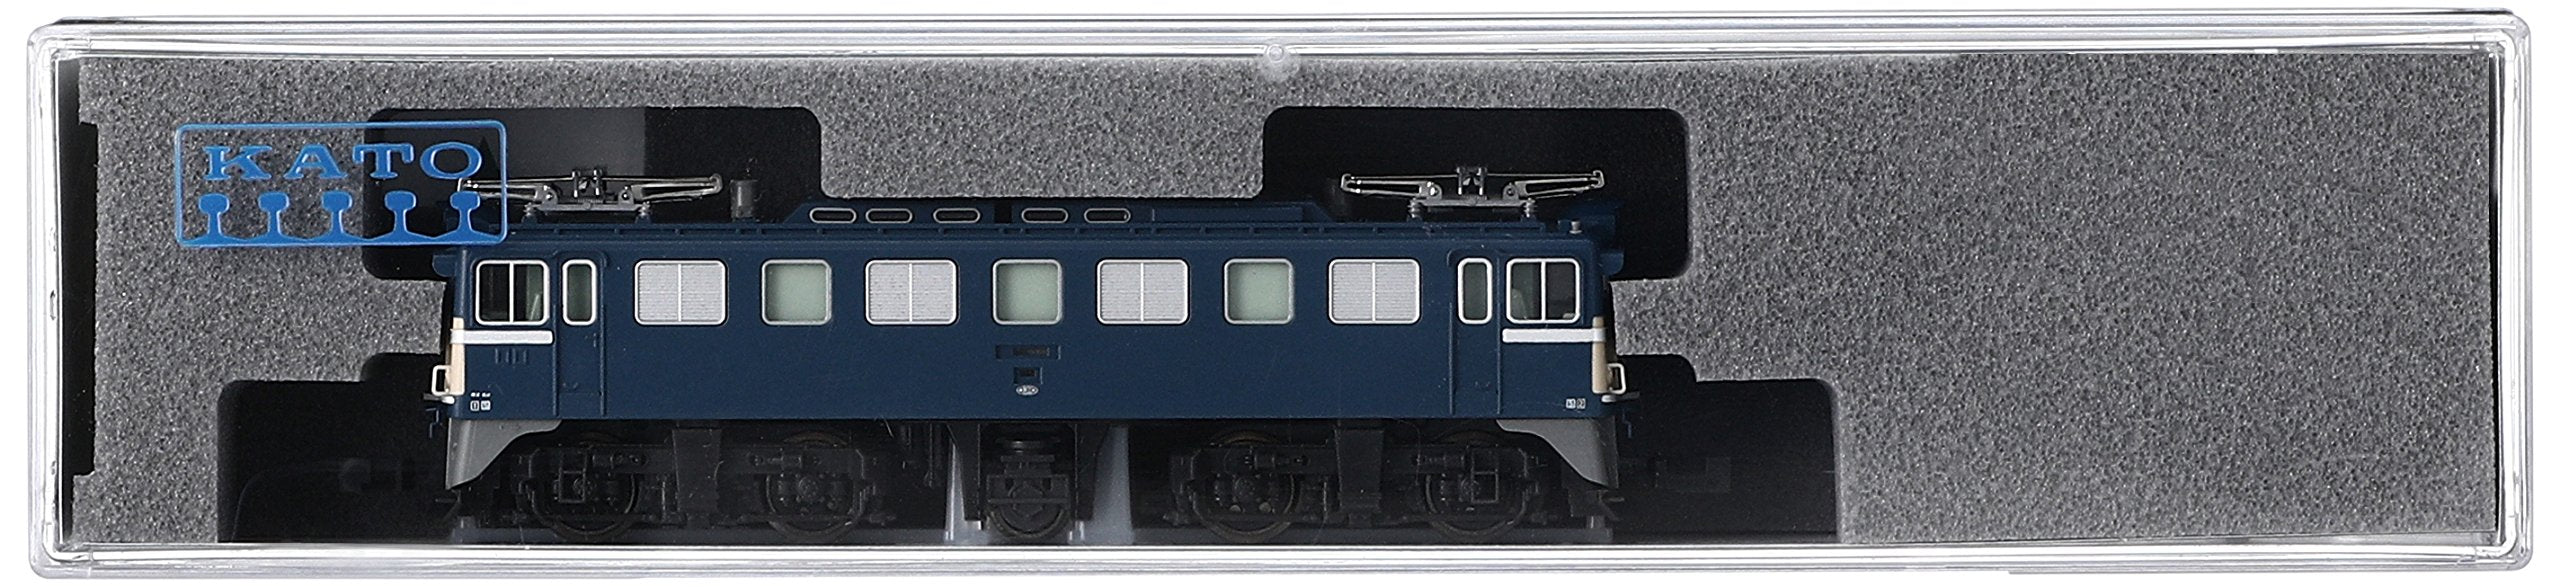 Kato Electric Locomotive Railway Model N Gauge Ed62 3084